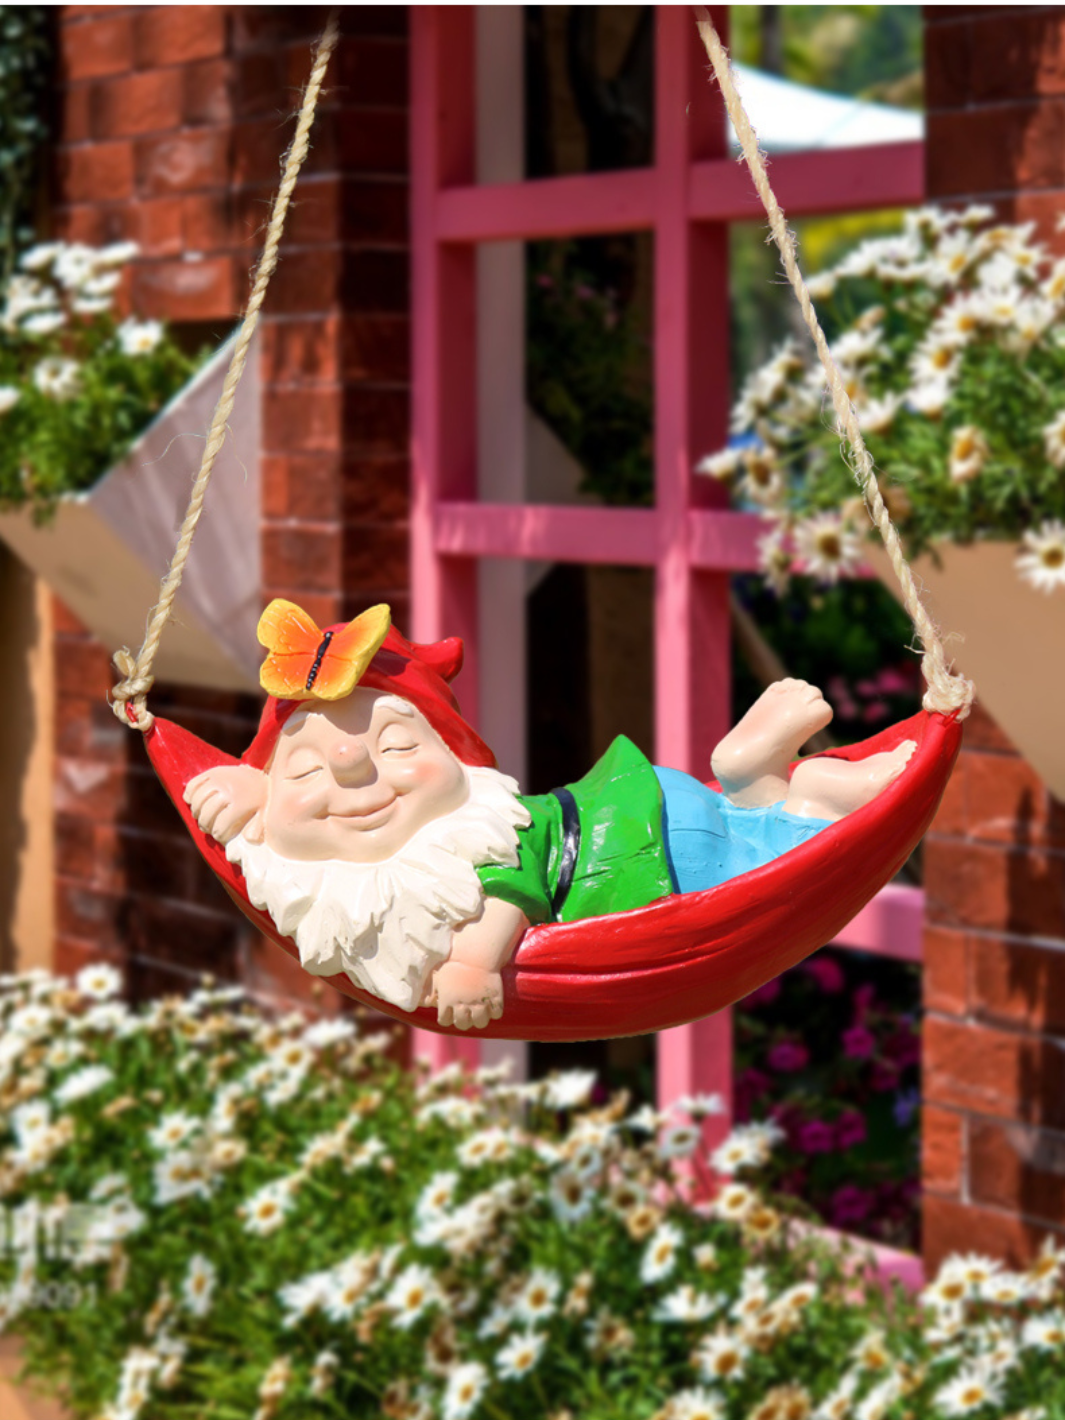 Creative Cute Swing Gnome Garden Decor Statue Resin Dwarfs Hang On Tree Decorative Pendant Indoor Outdoor Decor Ornament